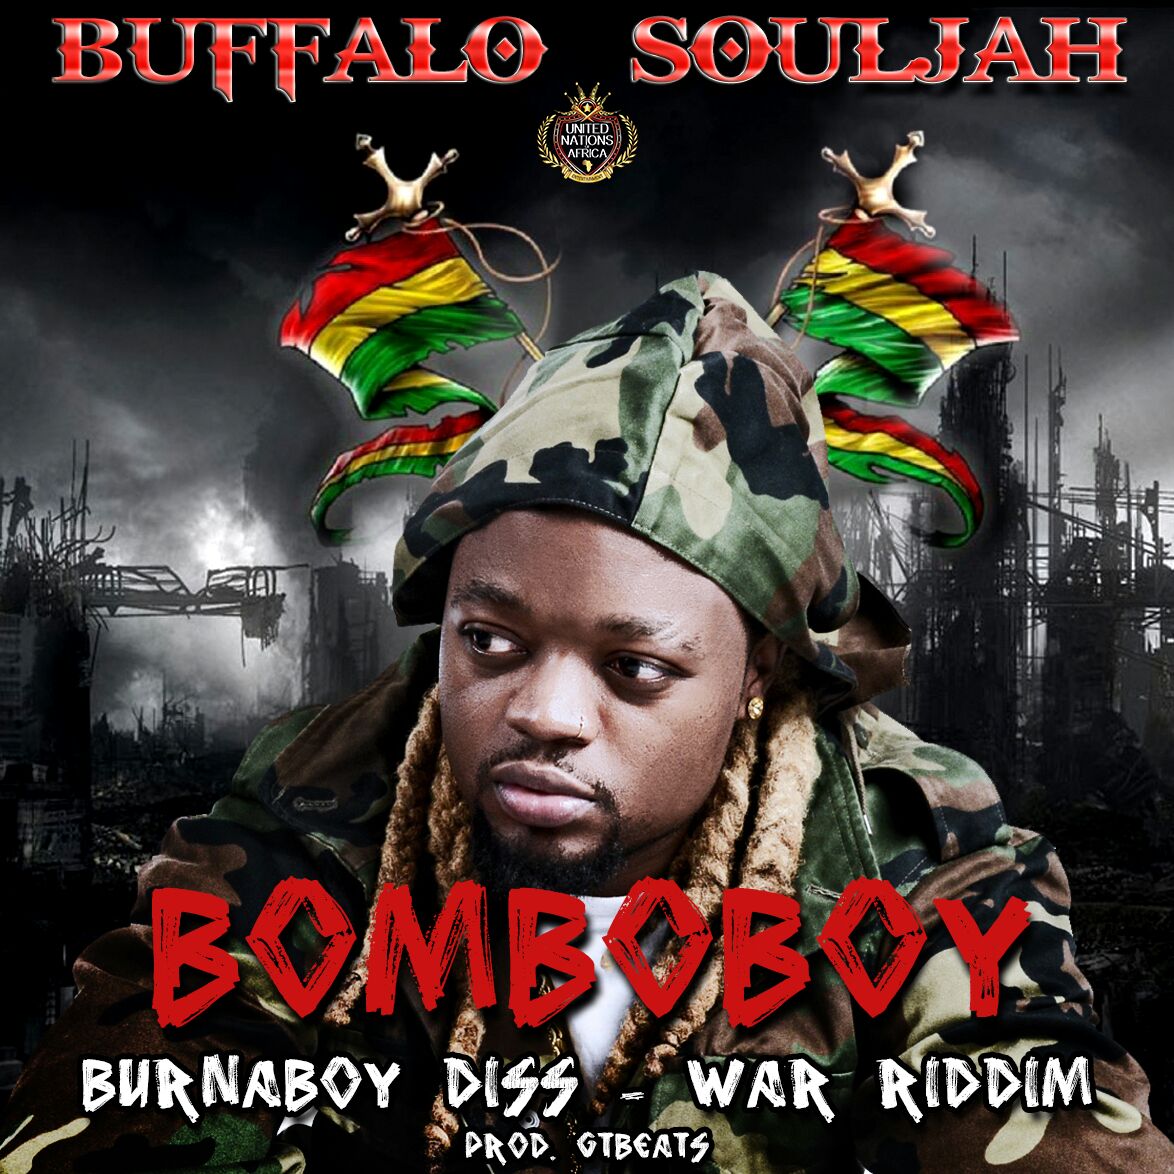 buffalo-souljah-bombobwoy-burna-boy-diss-prod-by-gtbeats